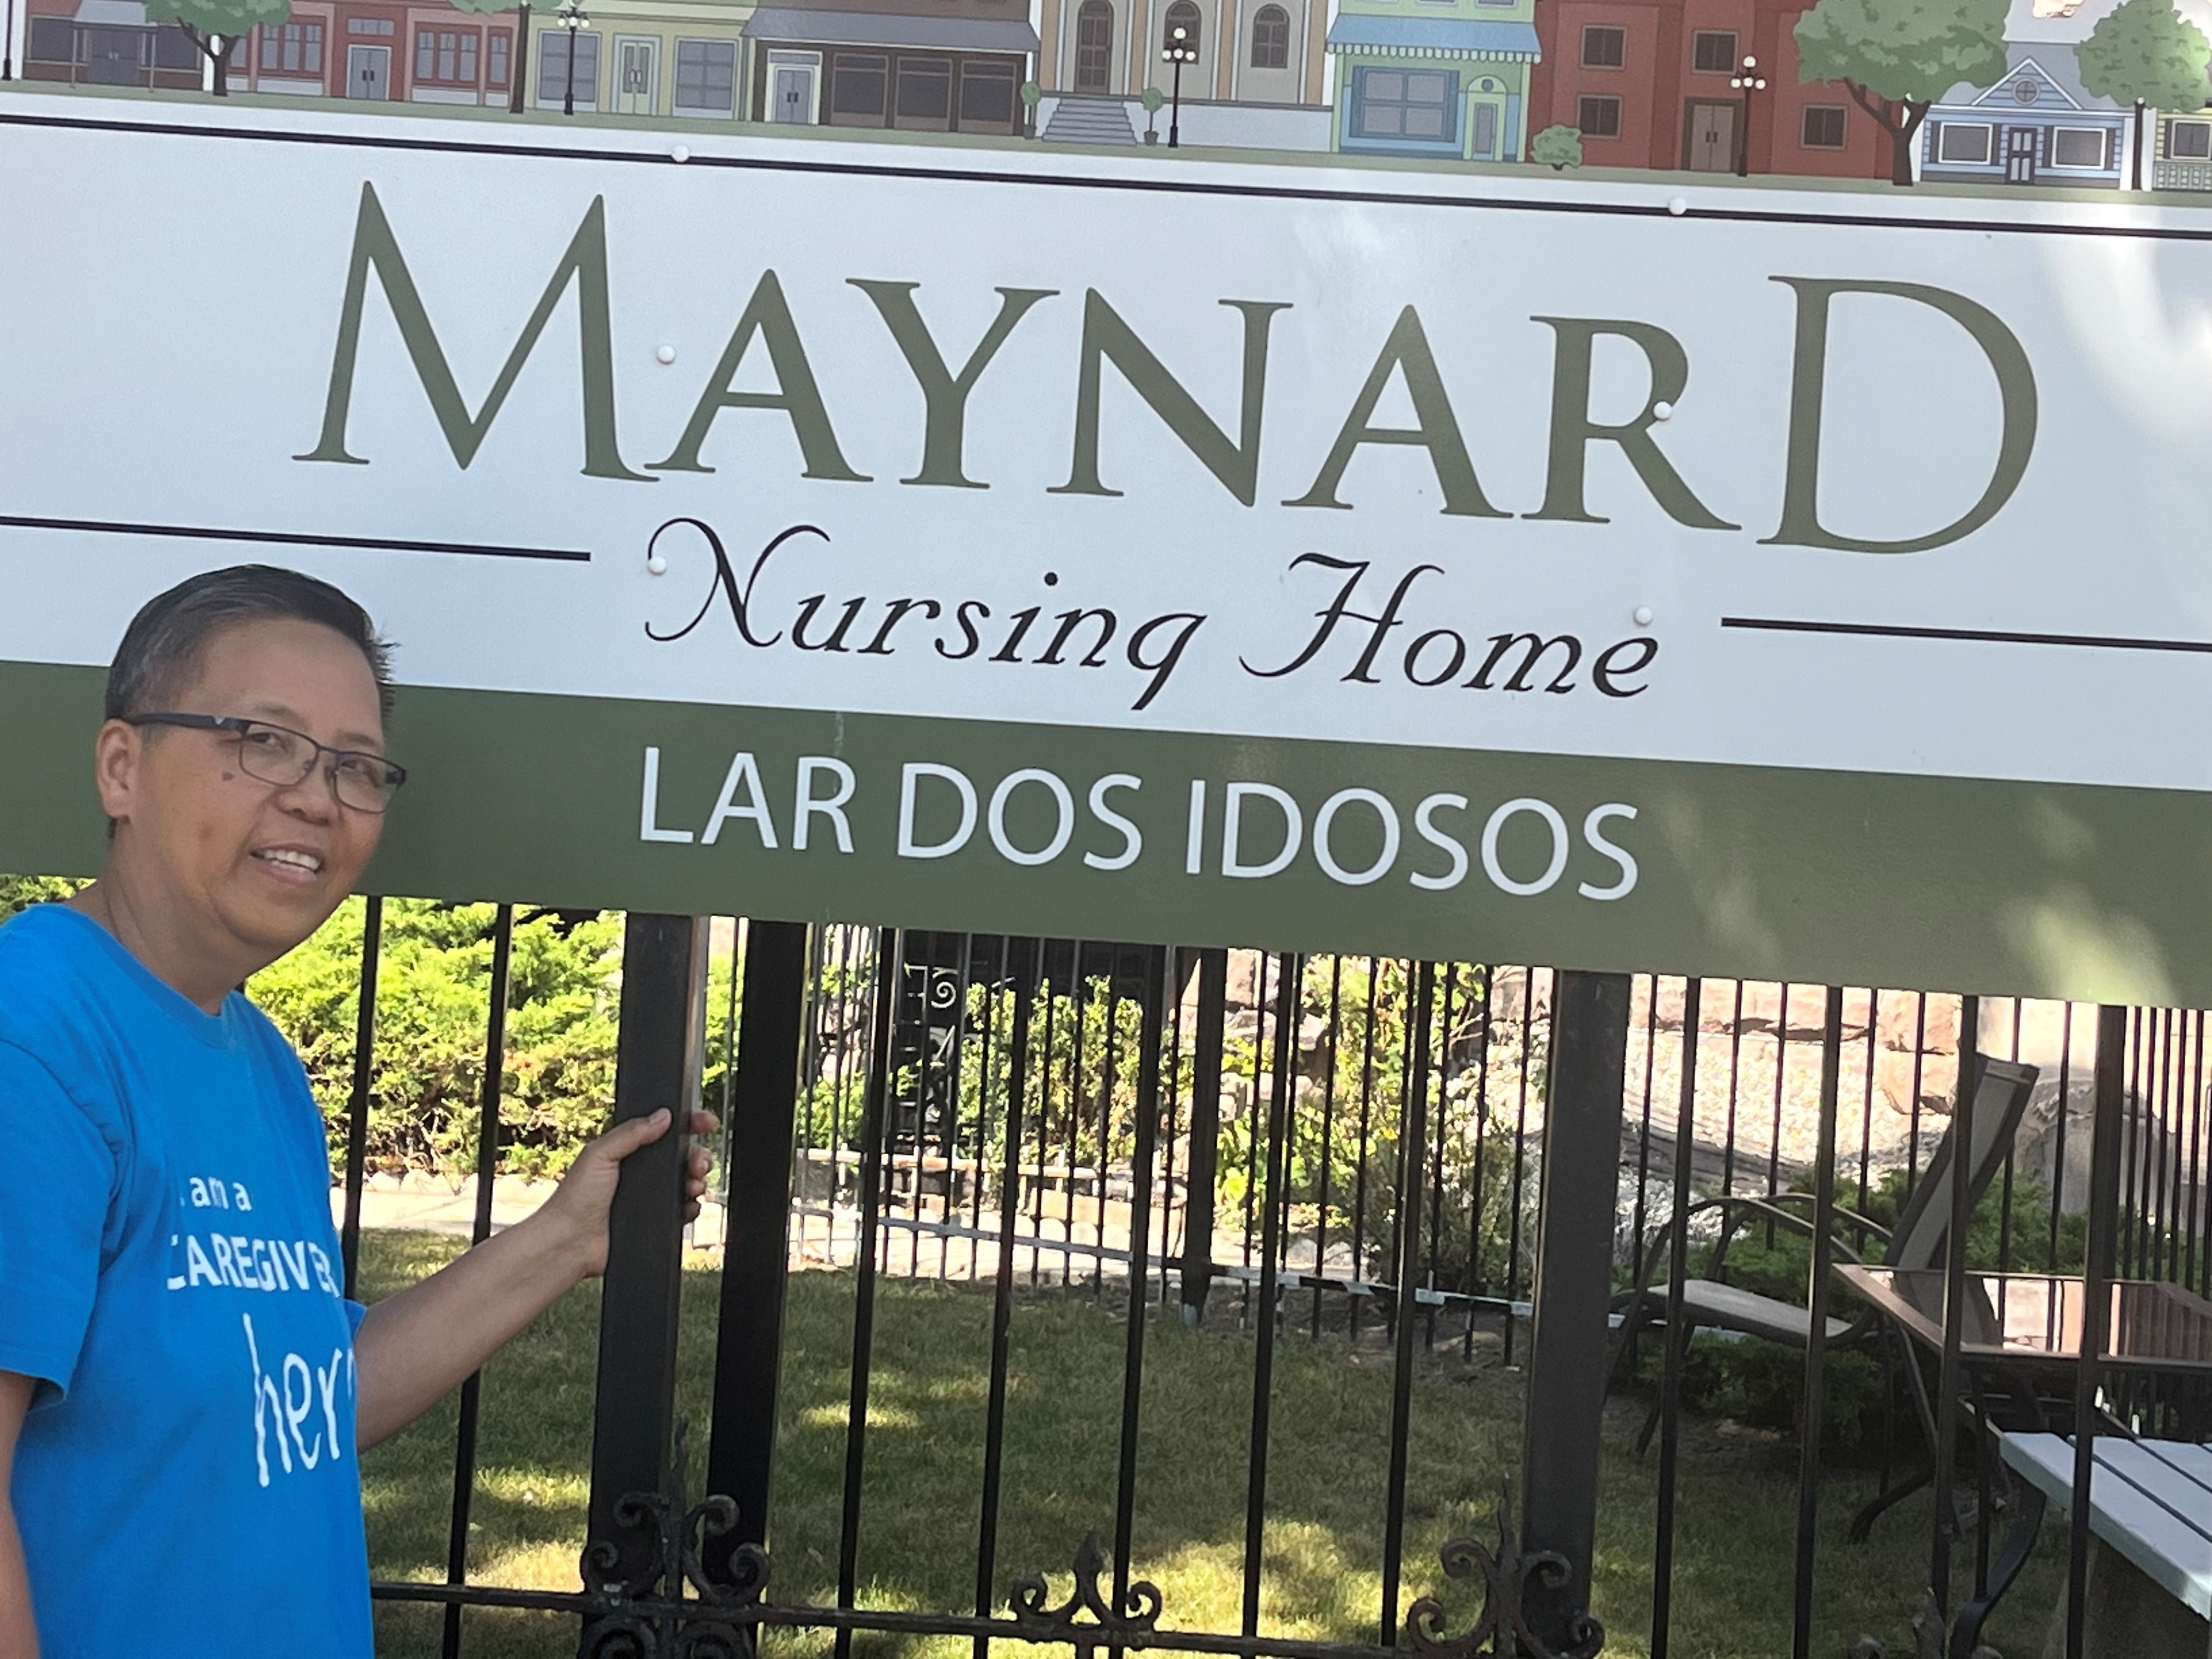 Lou stands beside the sign for Maynard Nursing Home.